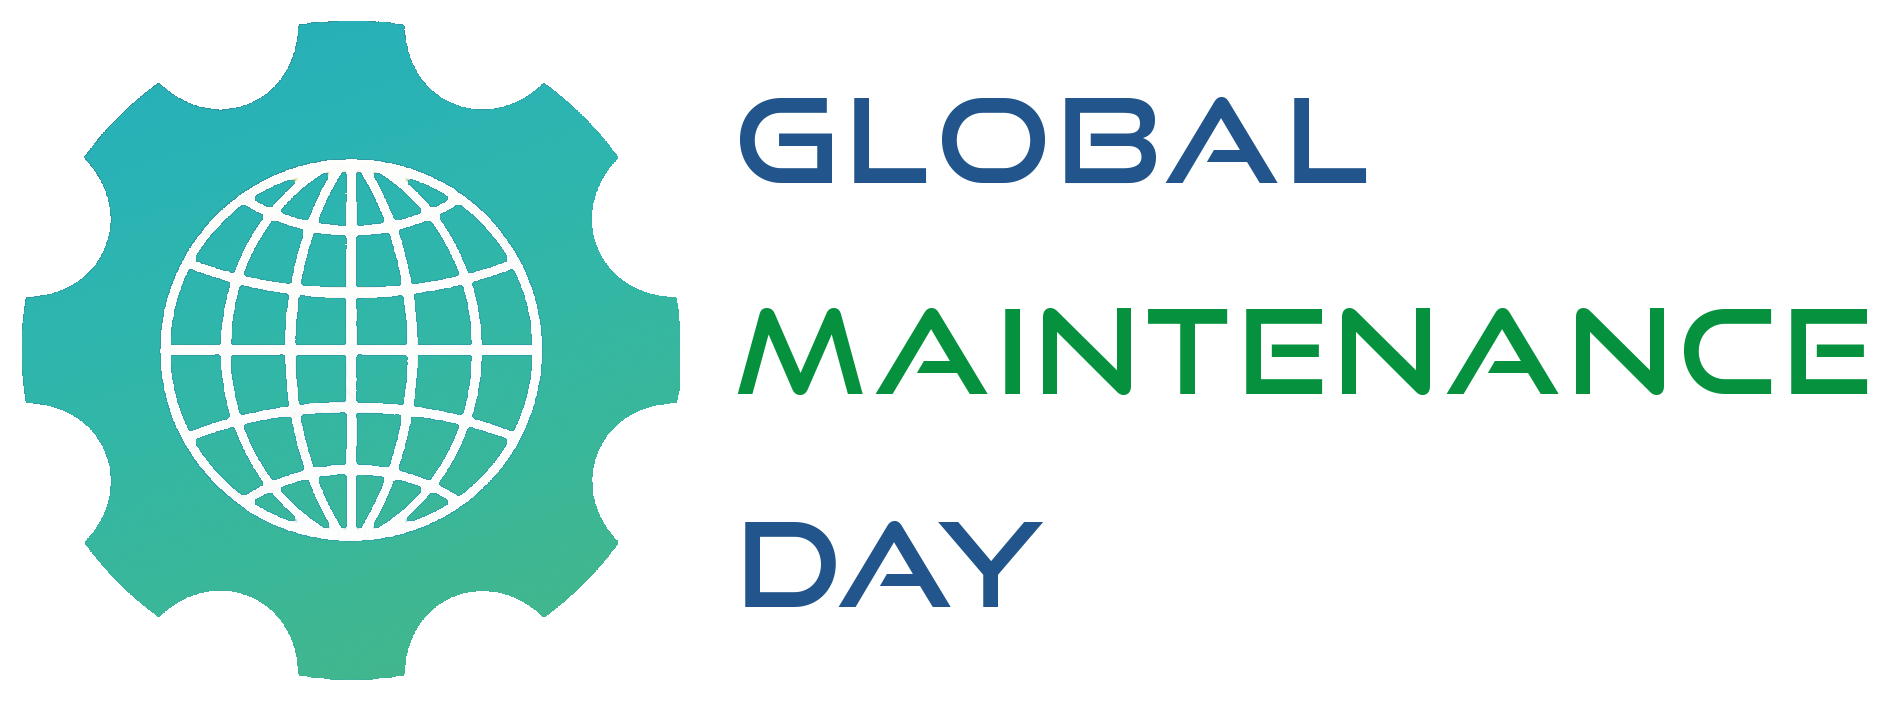 Global-Maintenance-Day-MFA-Kalender